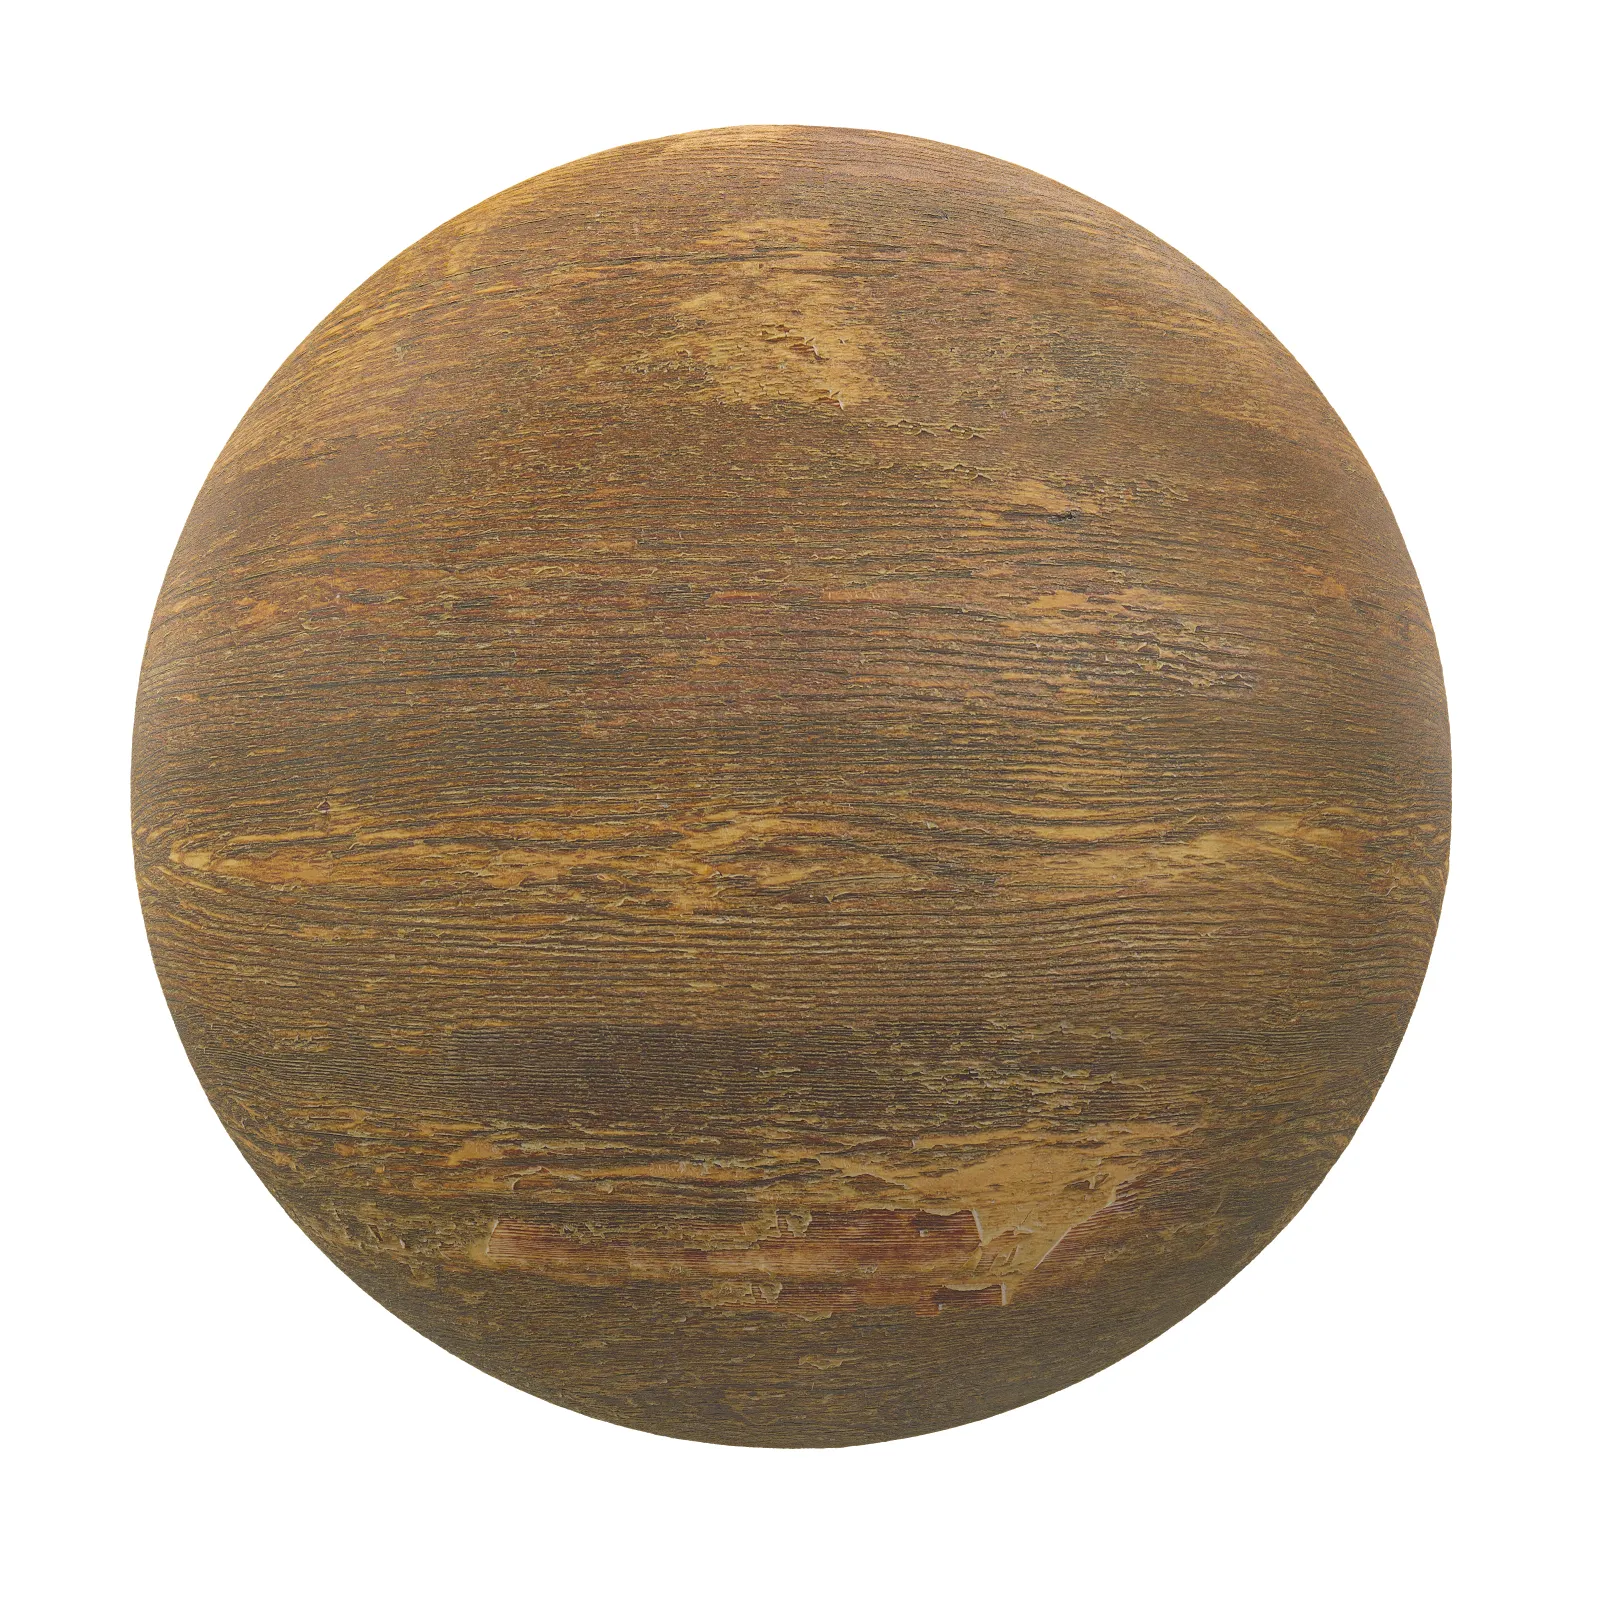 3ds Max Files – Texture – 8 – Wood Texture – 109 – Wood Texture by Minh Nguyen